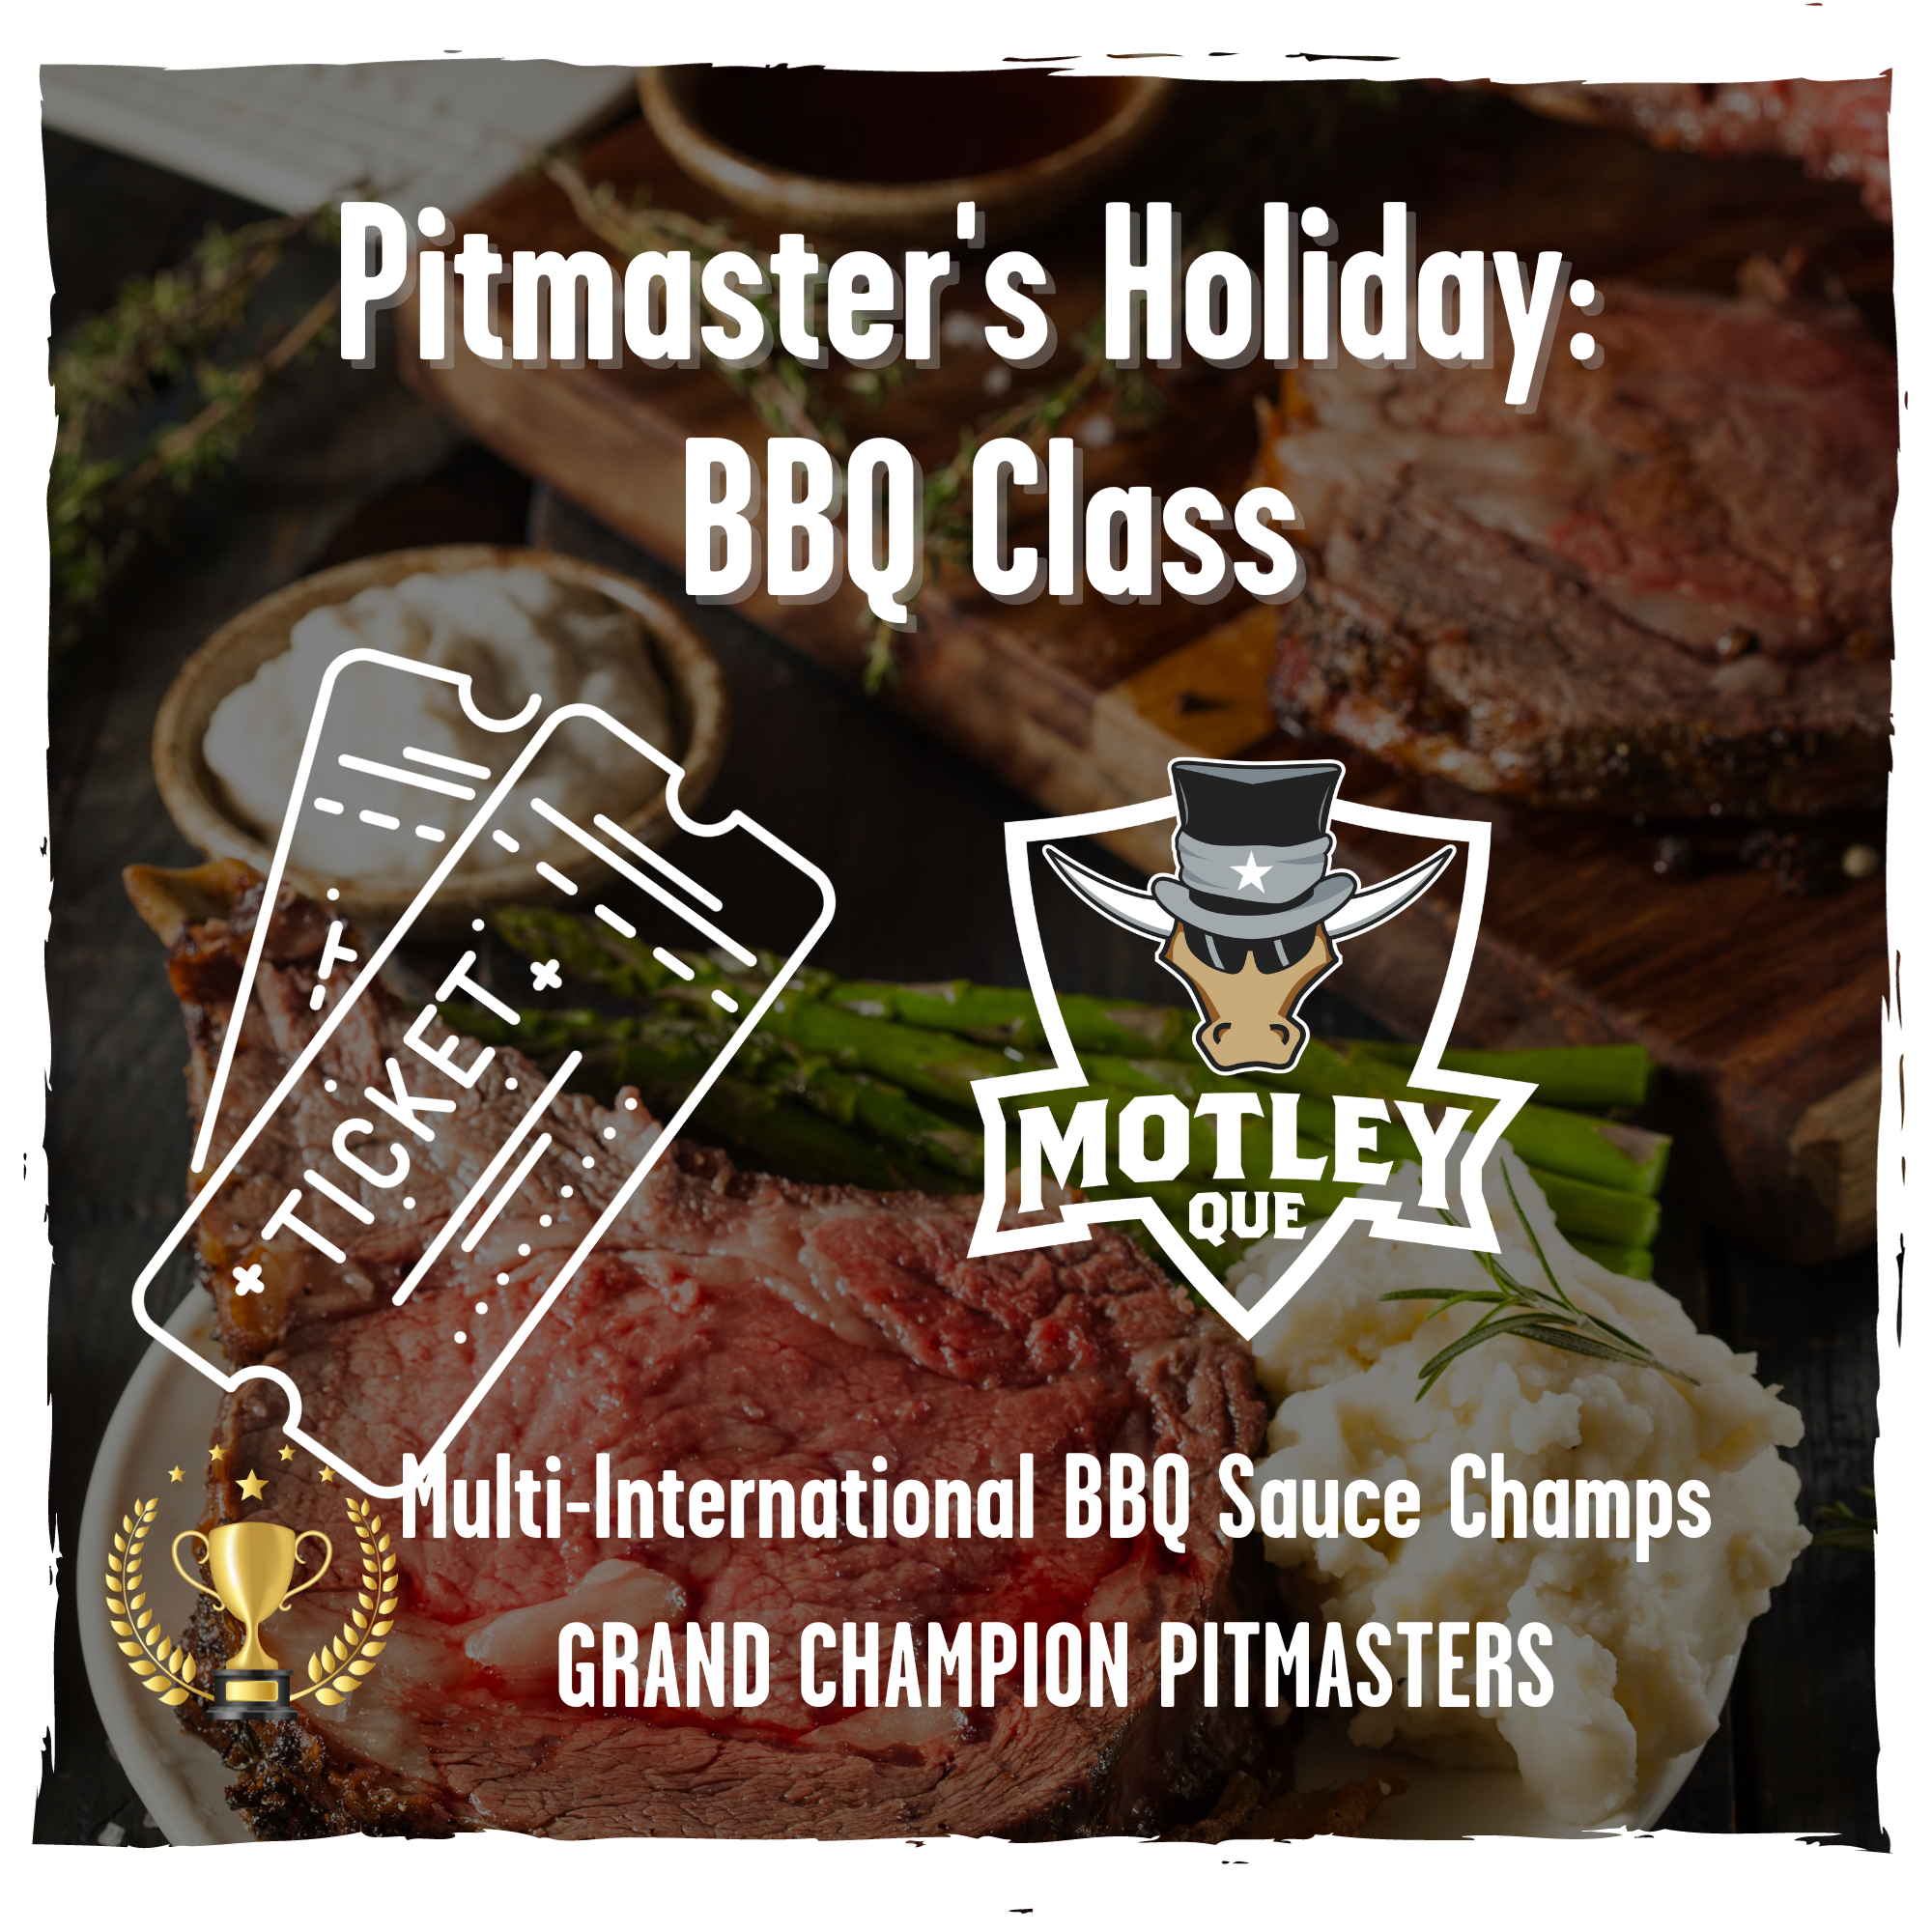 Pitmaster Holiday BBQ Class - Dec 7th